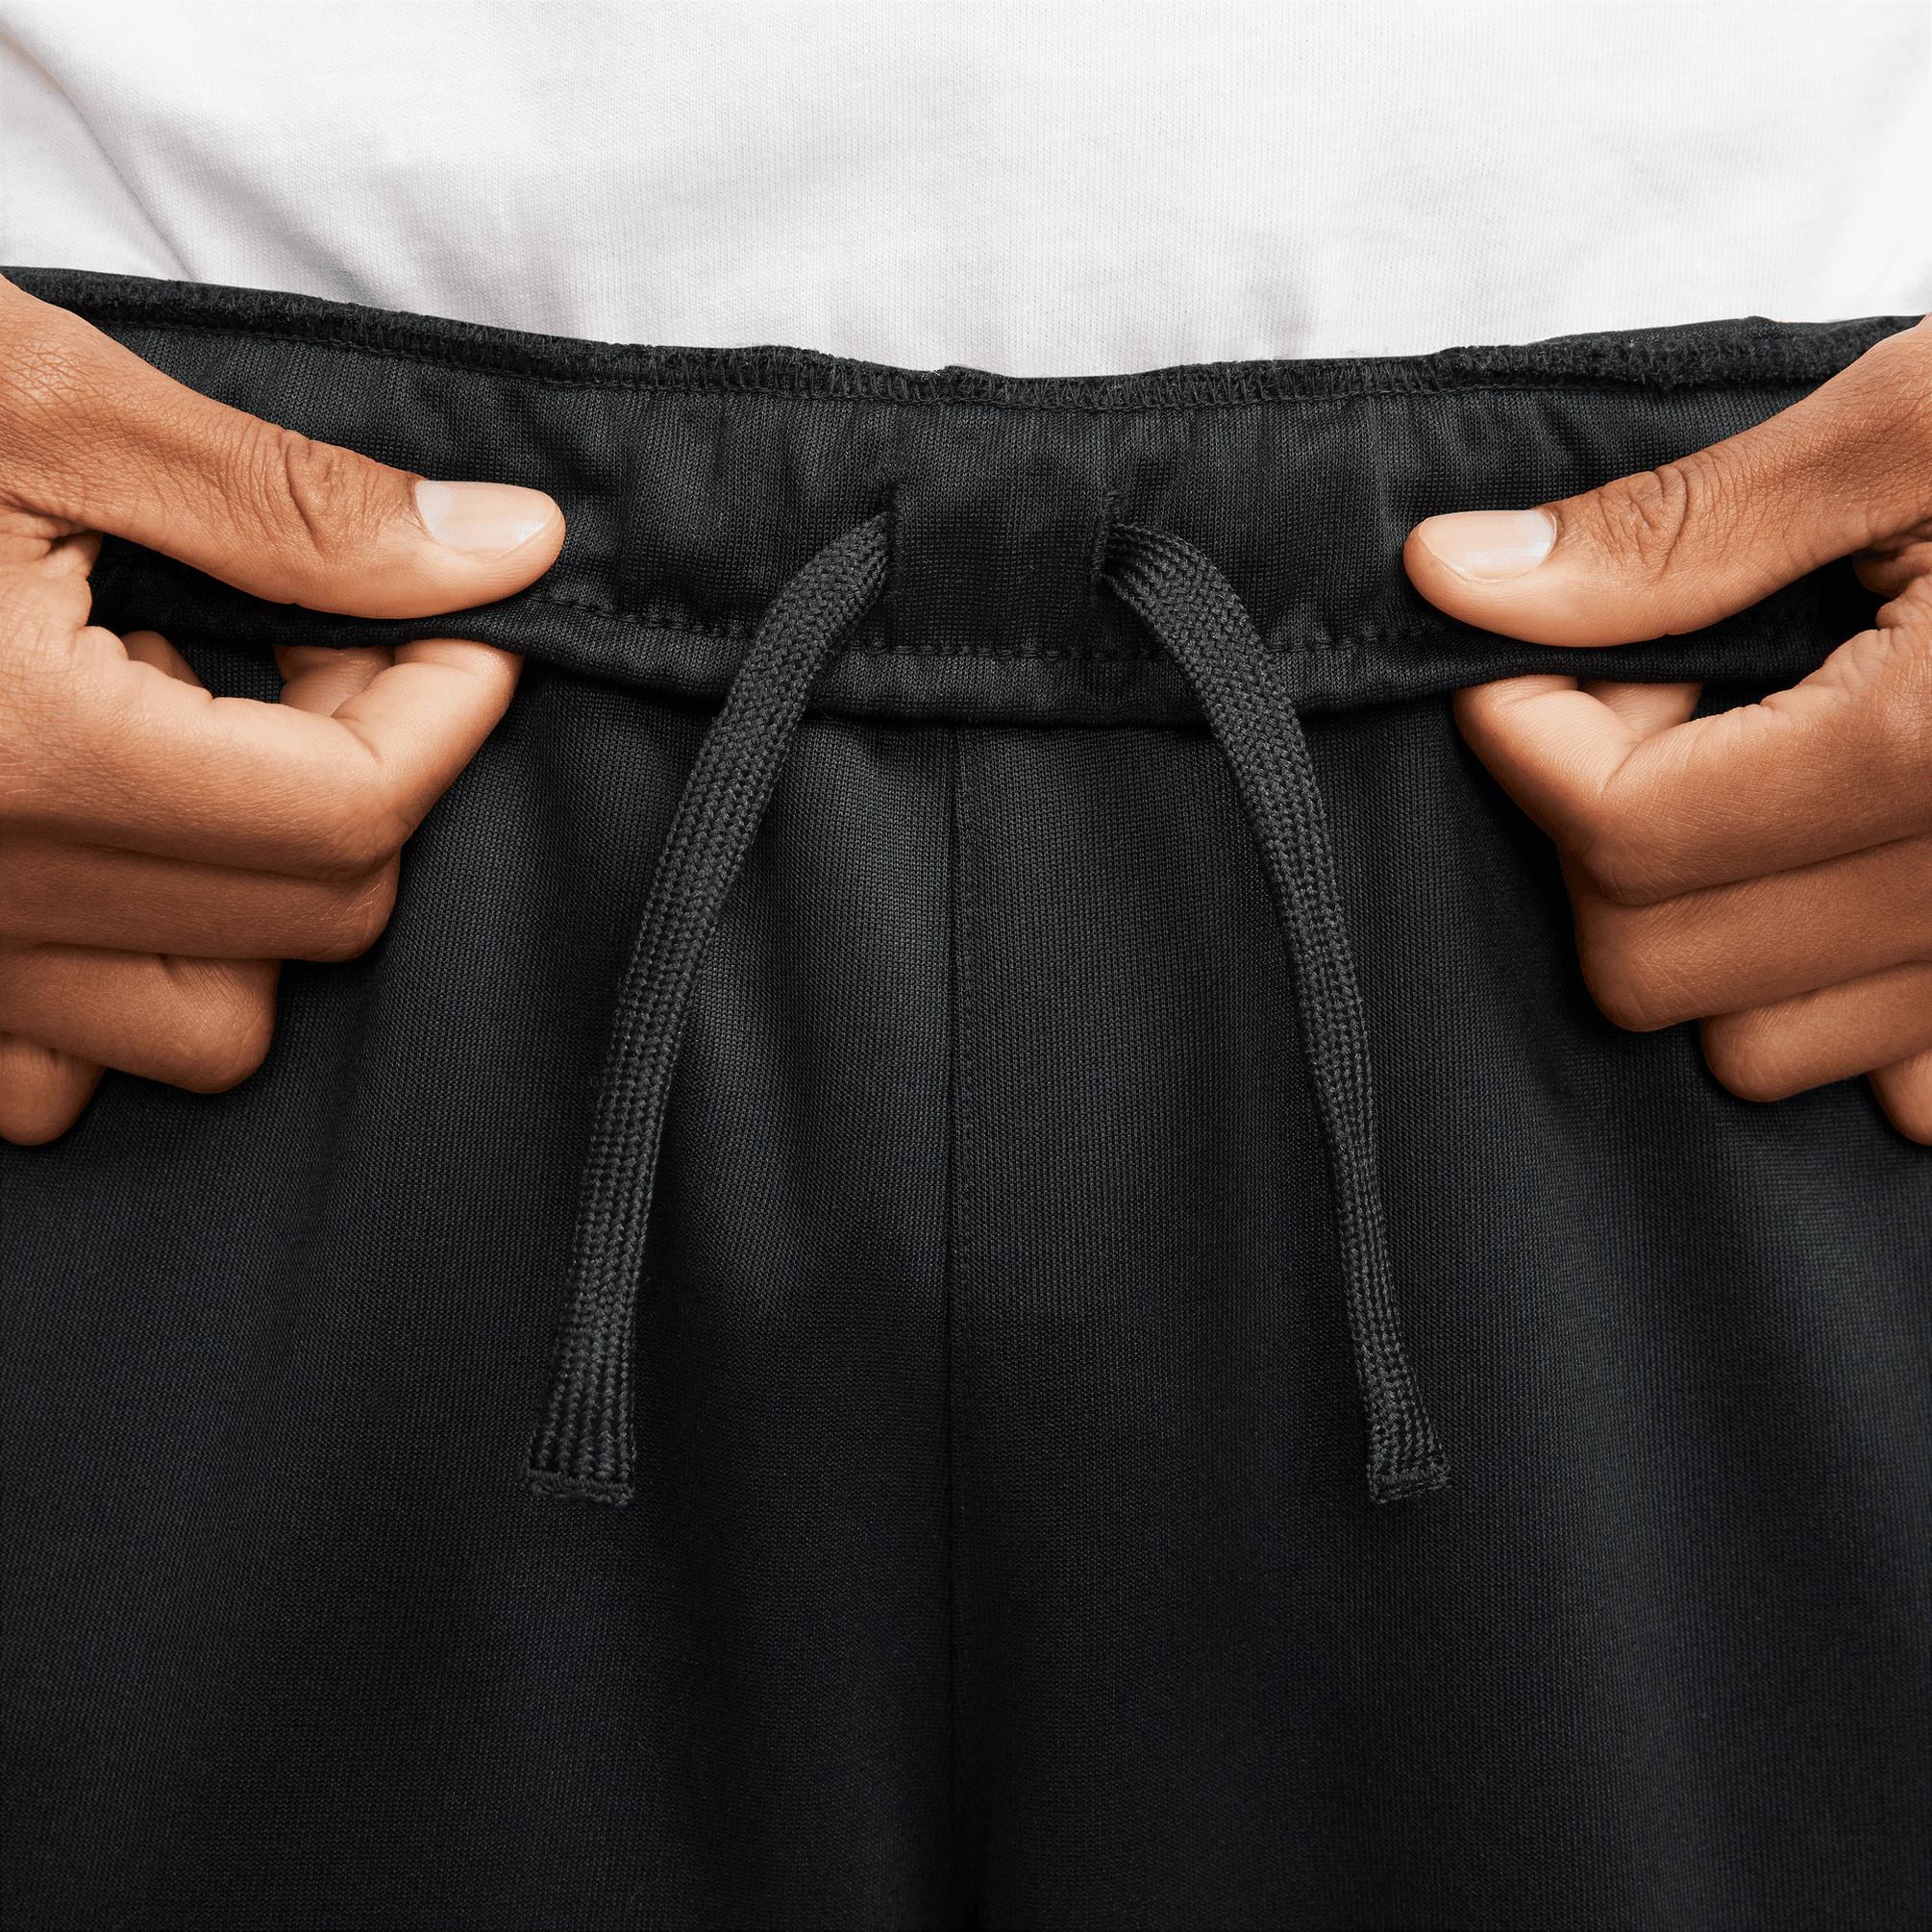  Nike Sportswear Repeat Erkek Siyah Eşofman Altı